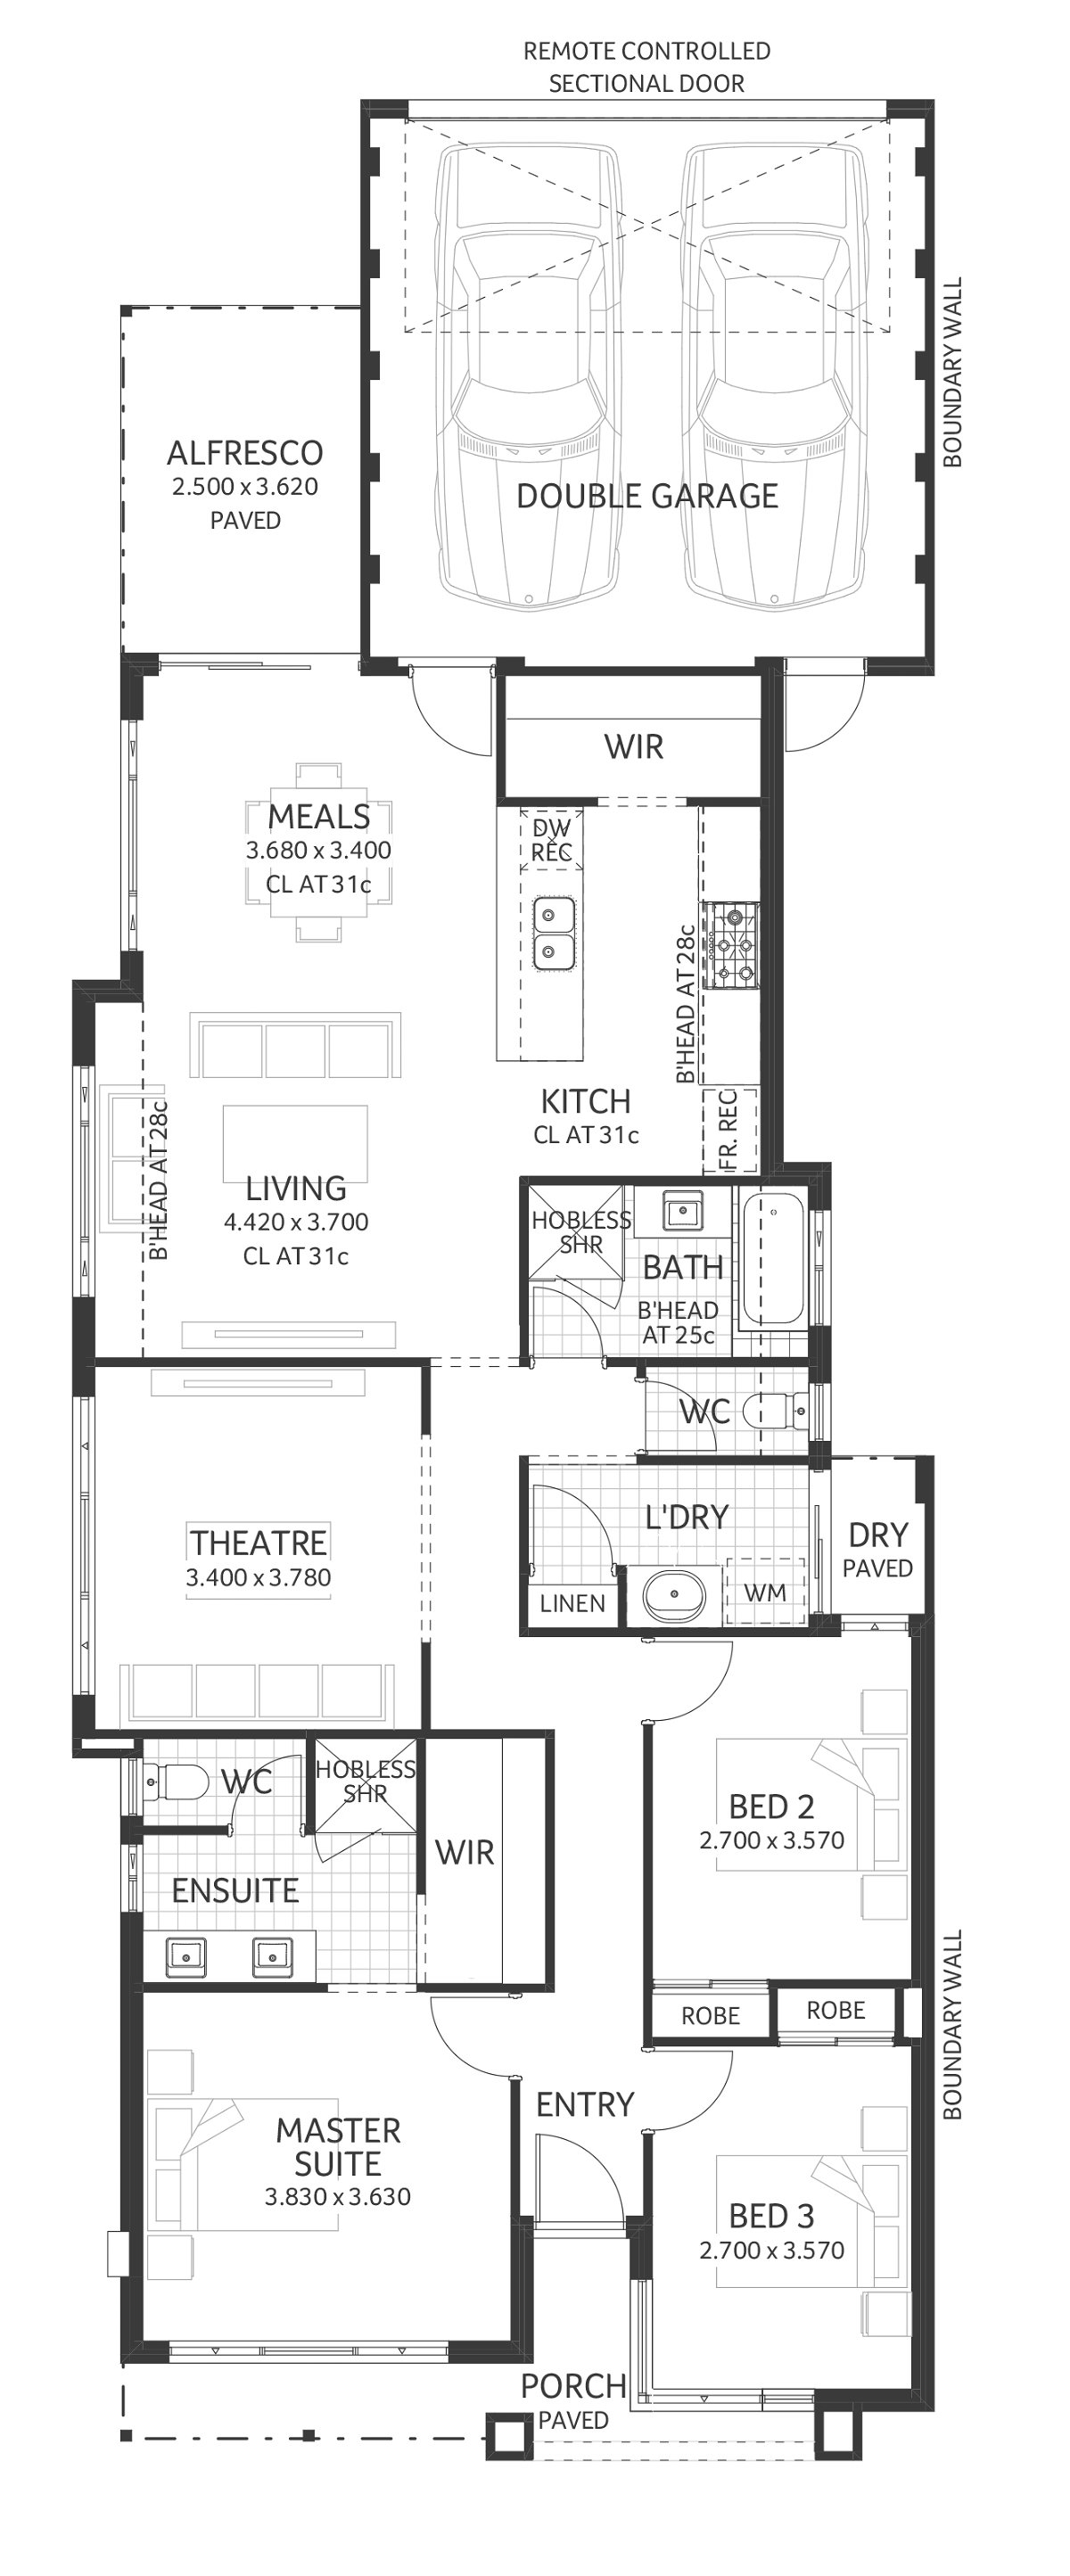 Plunkett Homes - Voyager | Hamptons - Floorplan - Voyager Hamptons Marketing Plan Webjpg